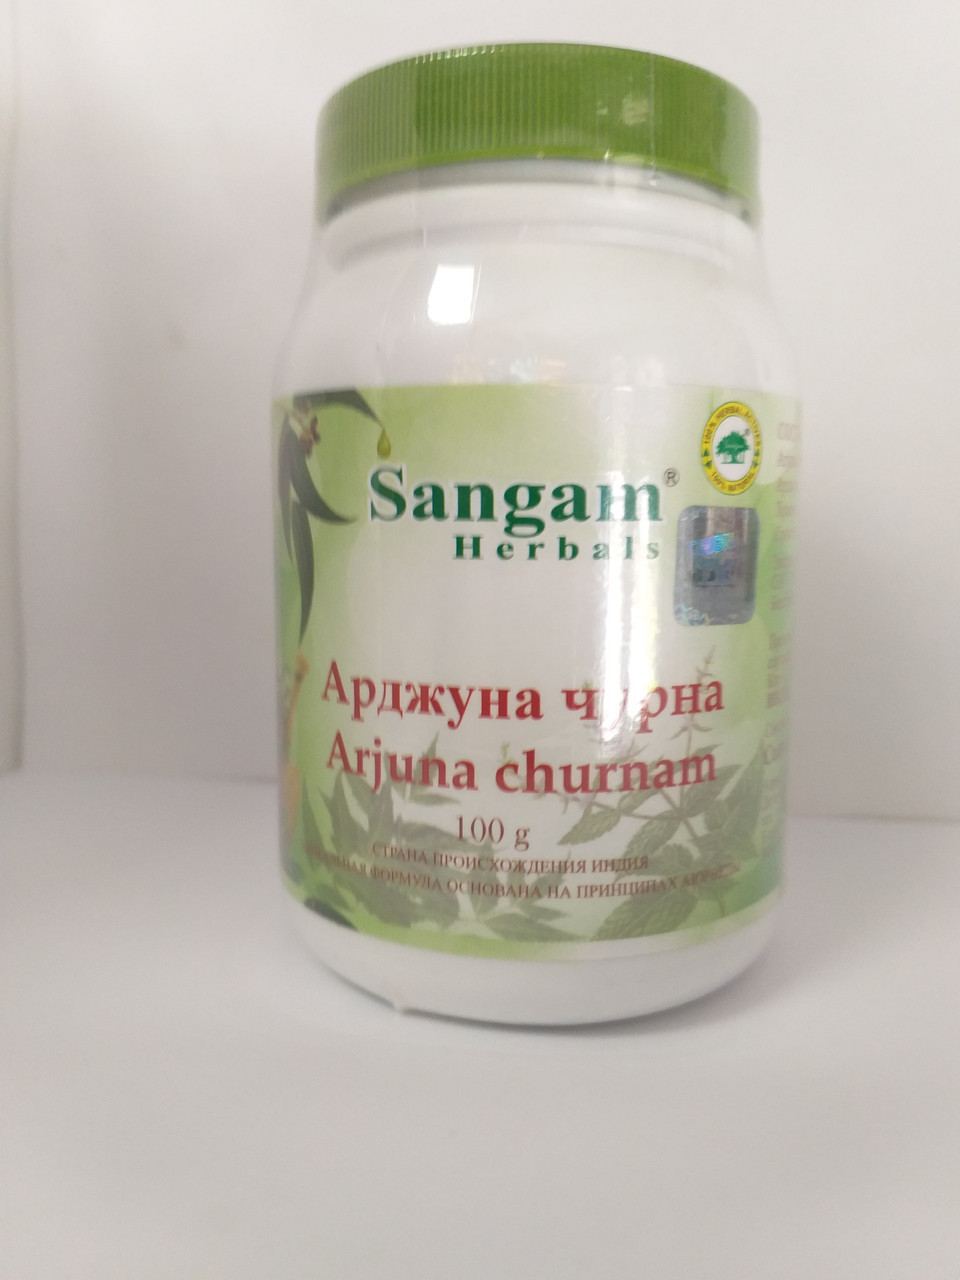 Арджуна чурна, 100 гр, Сангам, Arjuna churnam, Sangam Herbals